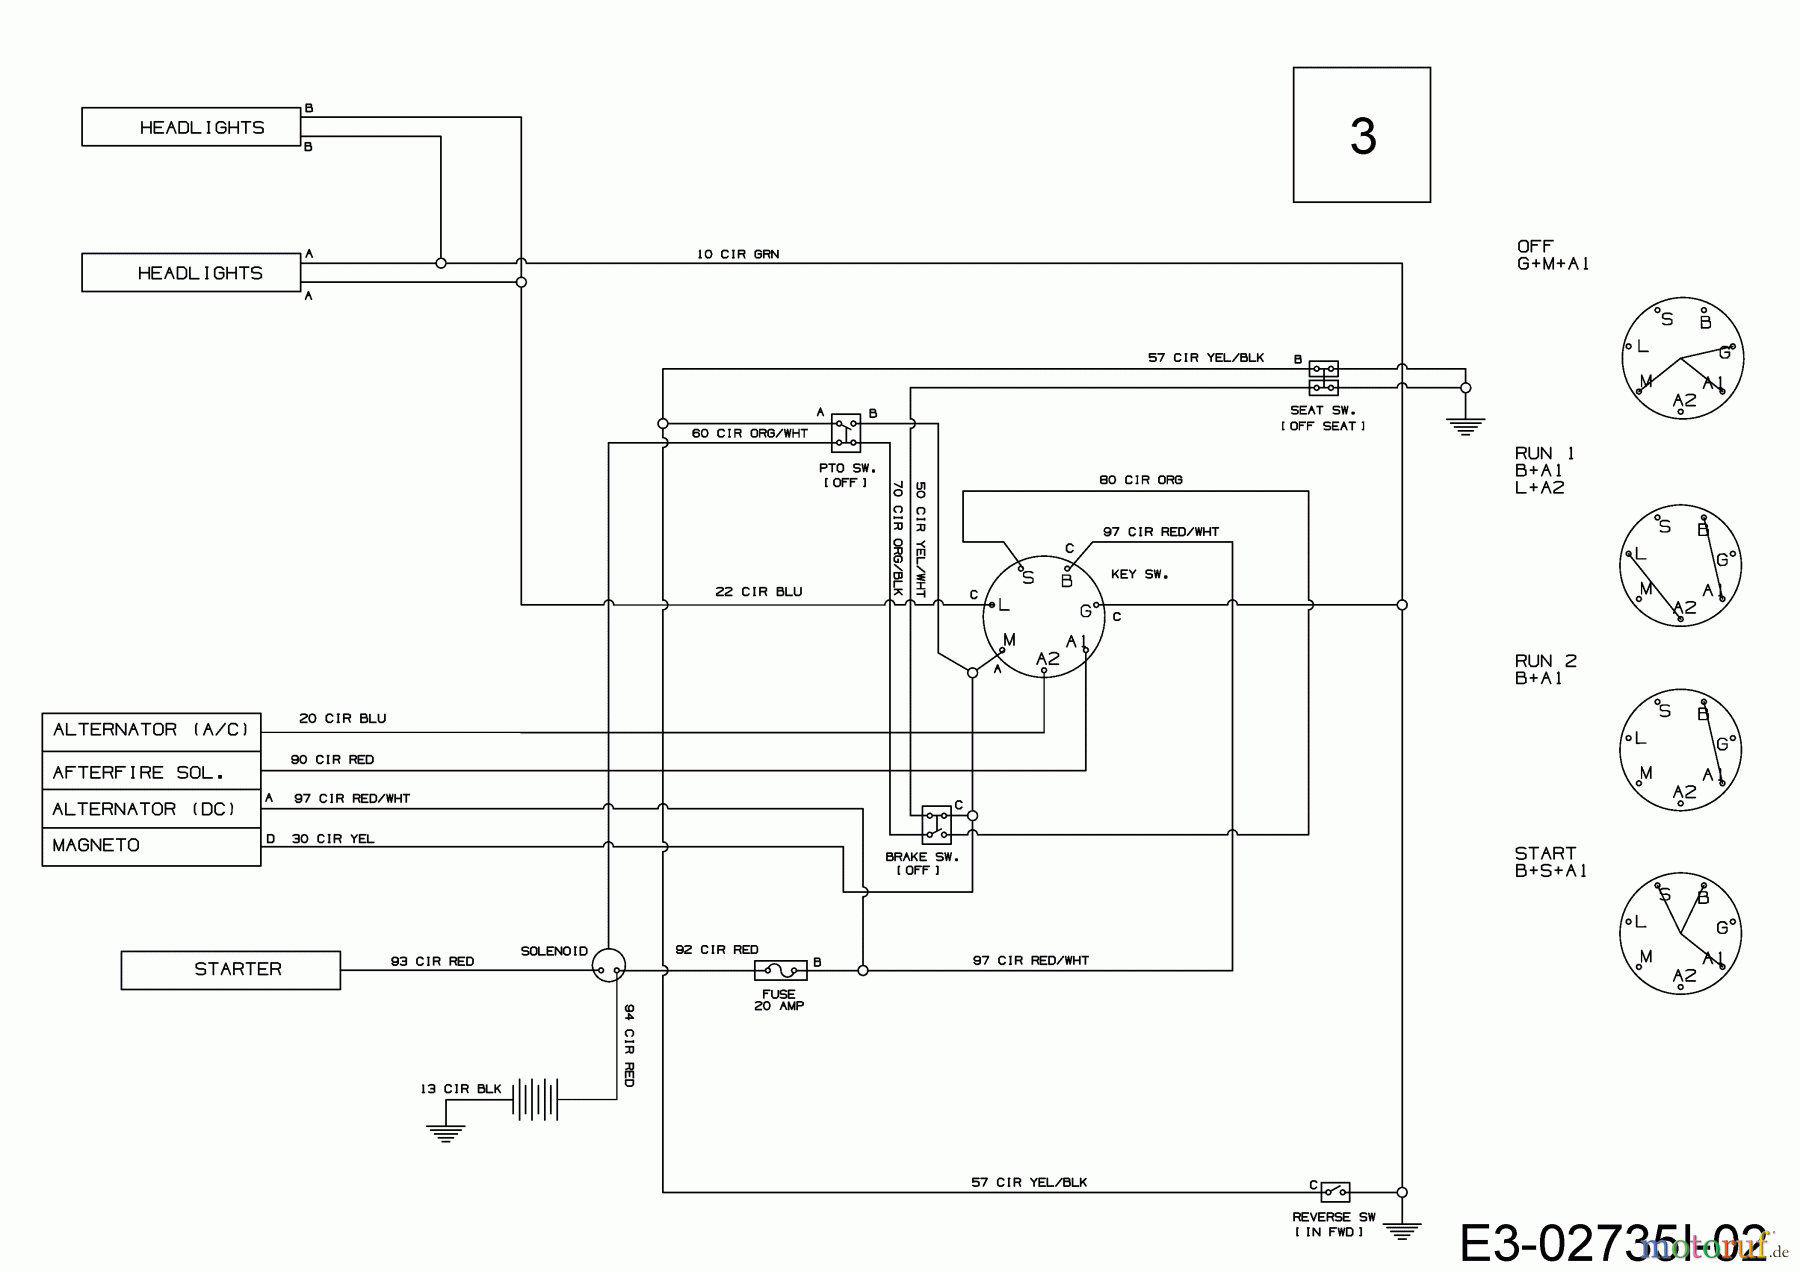  Bestgreen Lawn tractors BG 96 SBK 13H2765F655  (2018) Wiring diagram